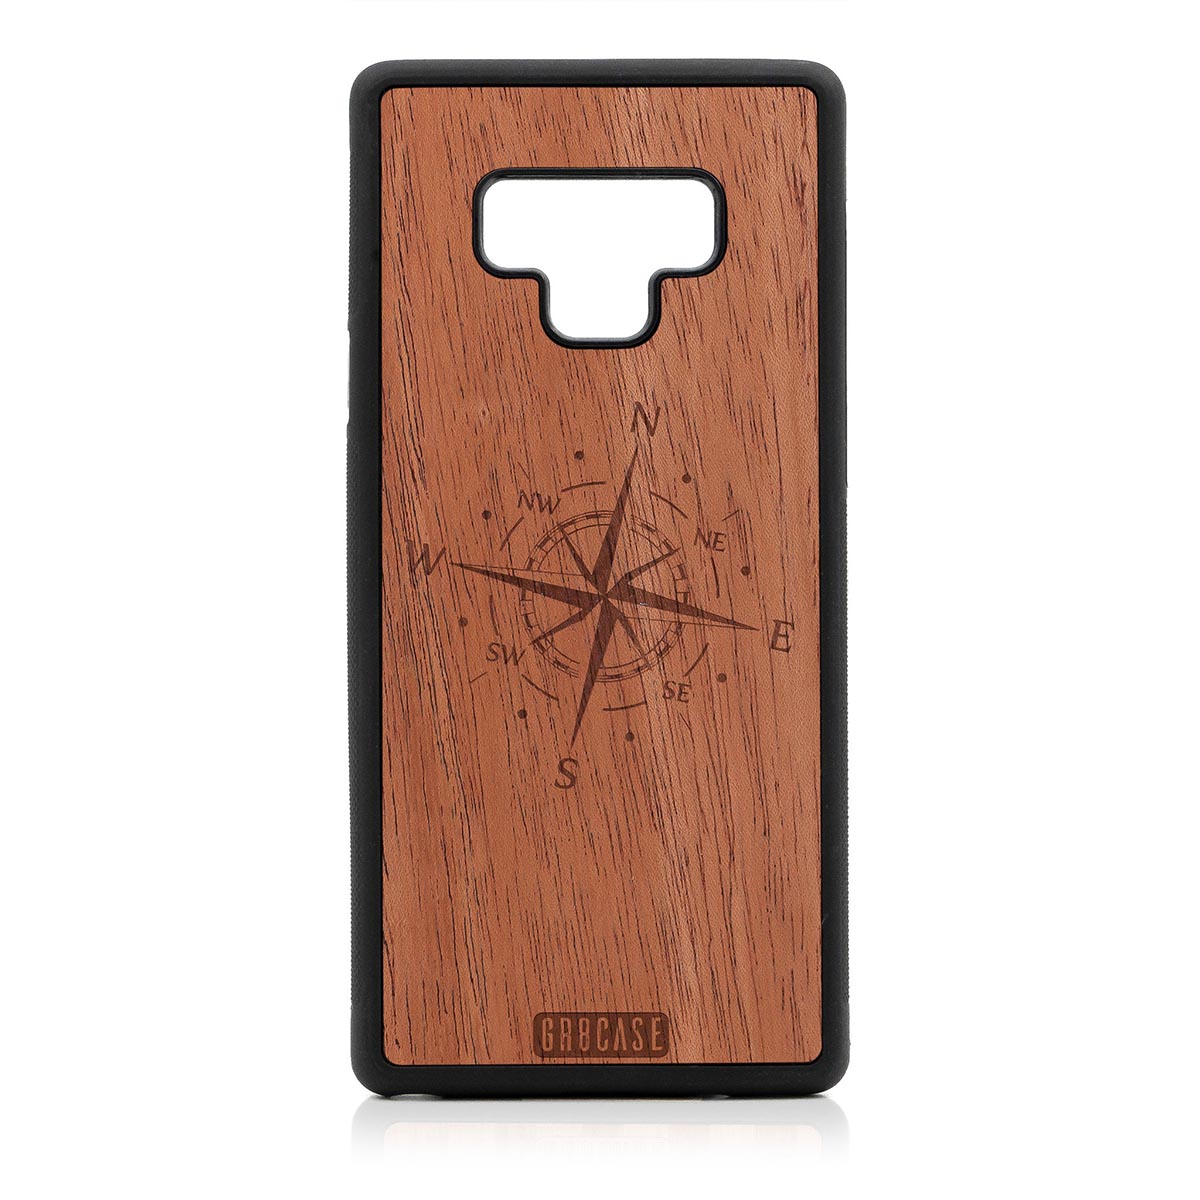 Compass Design Wood Case Samsung Galaxy Note 9 by GR8CASE